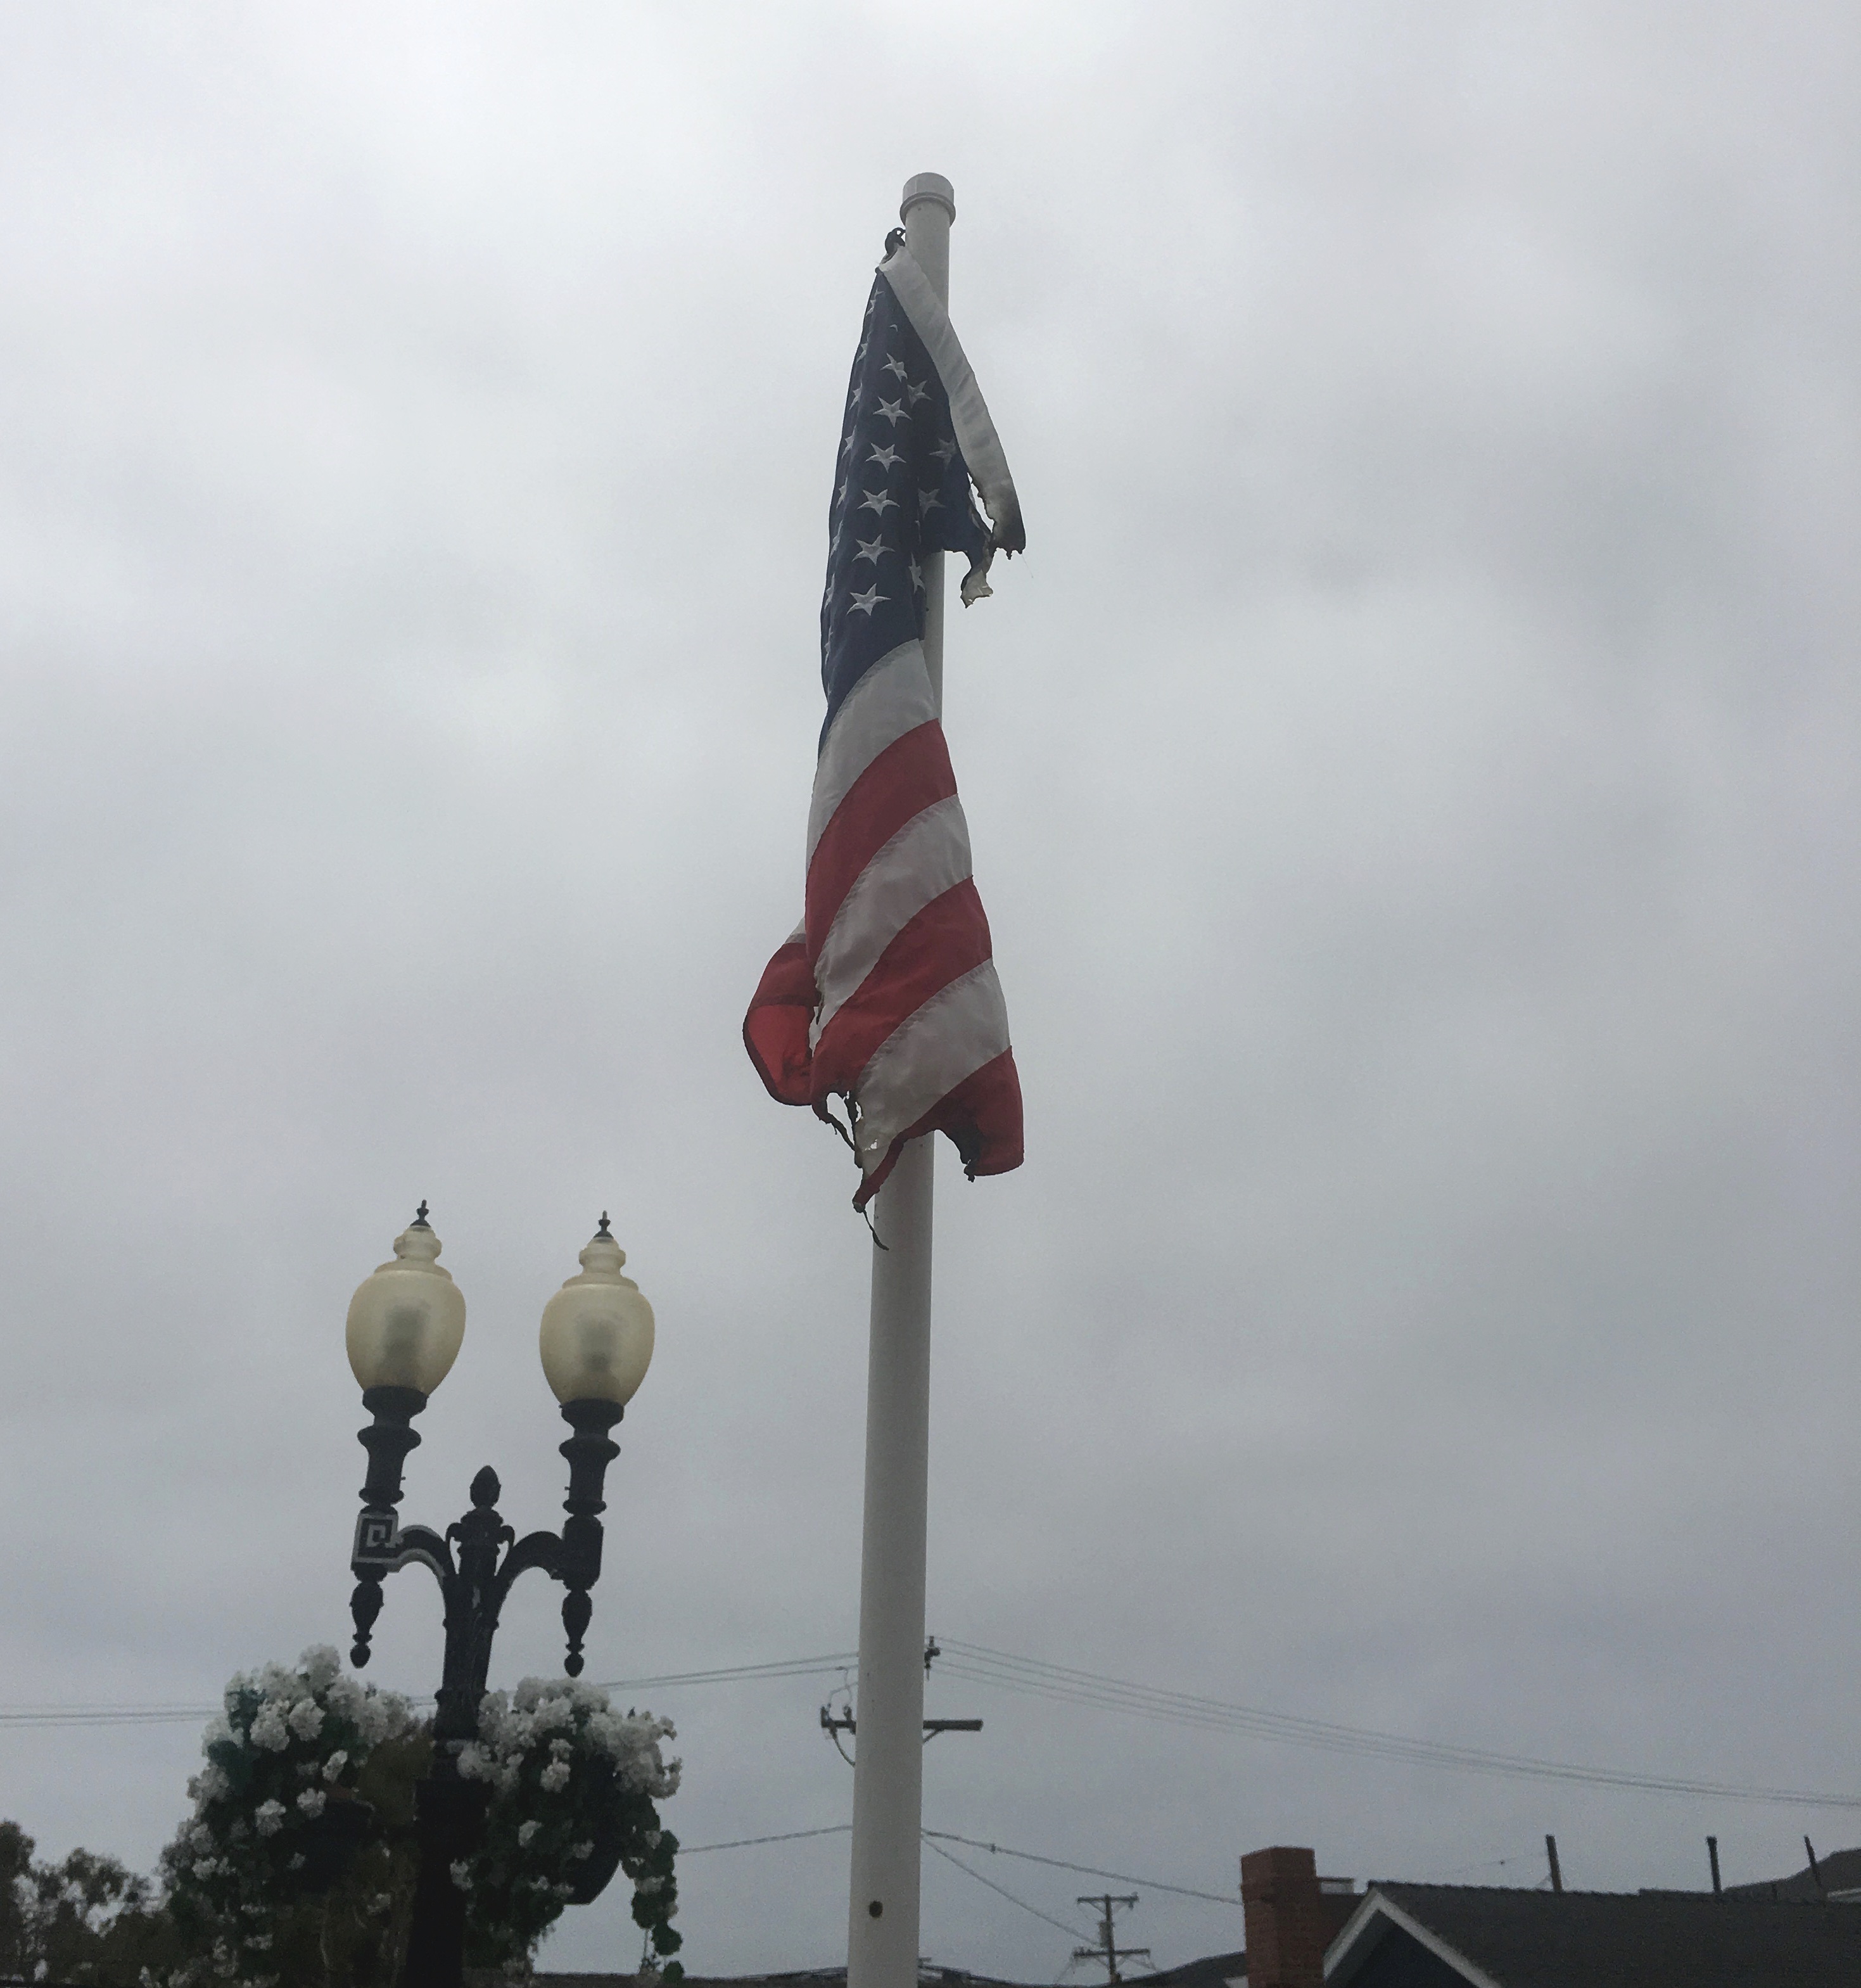 Clues sought after American flag burns on Balboa Island